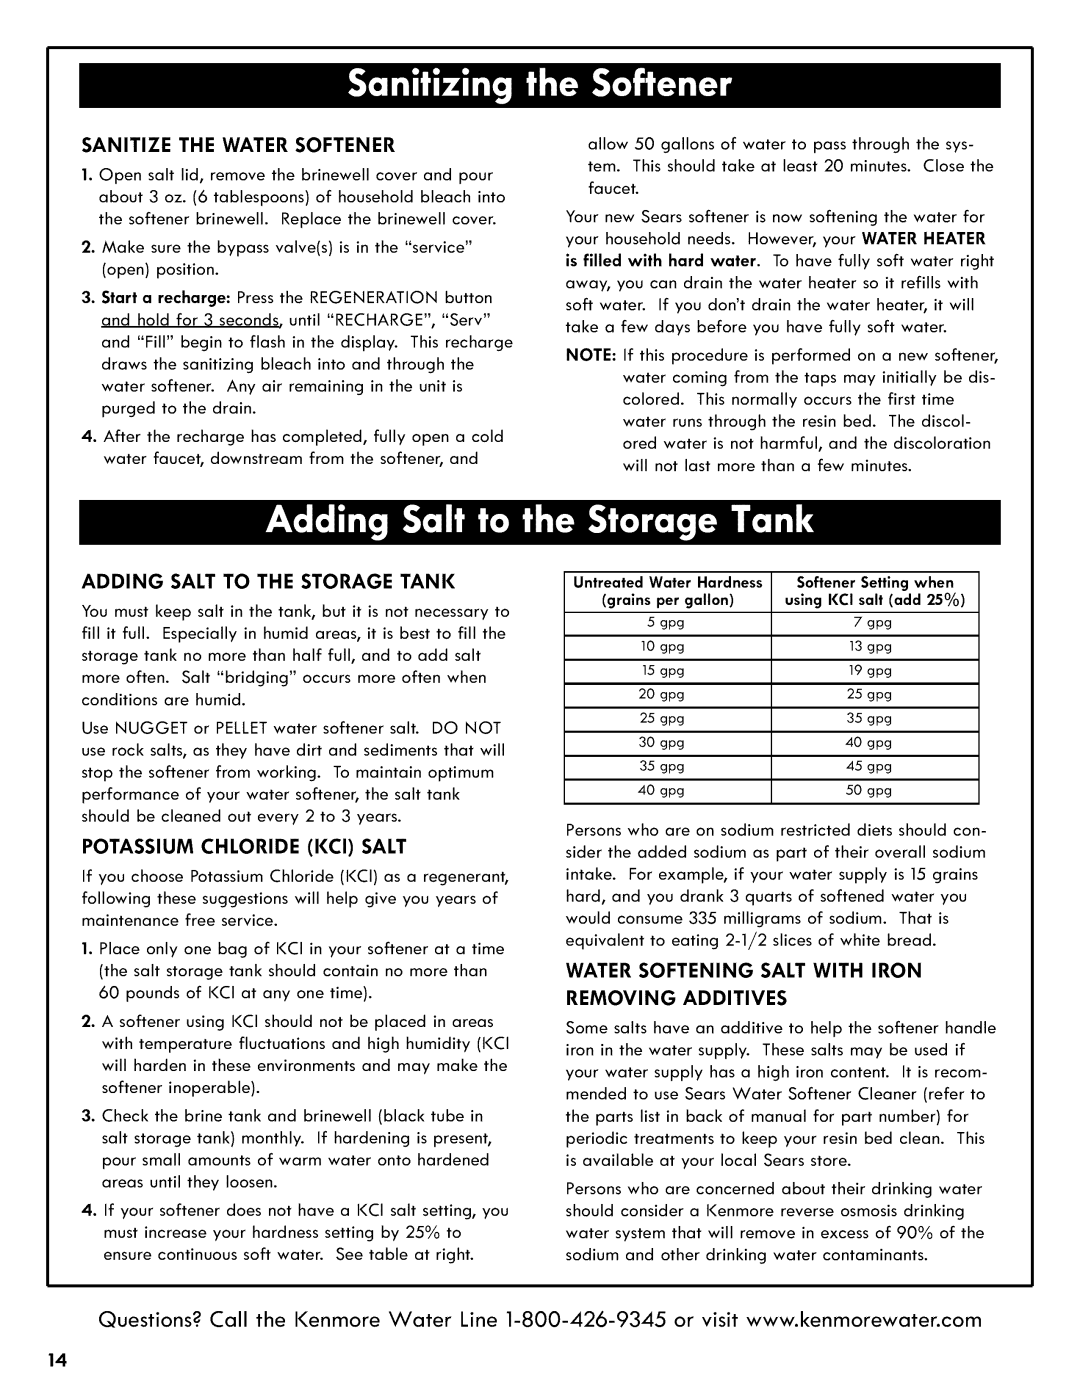 Kenmore 625.3835 manual Adding Salt To The Storage Tank, Potassium Chloride Ici Salt, Softener Setting when, grains 